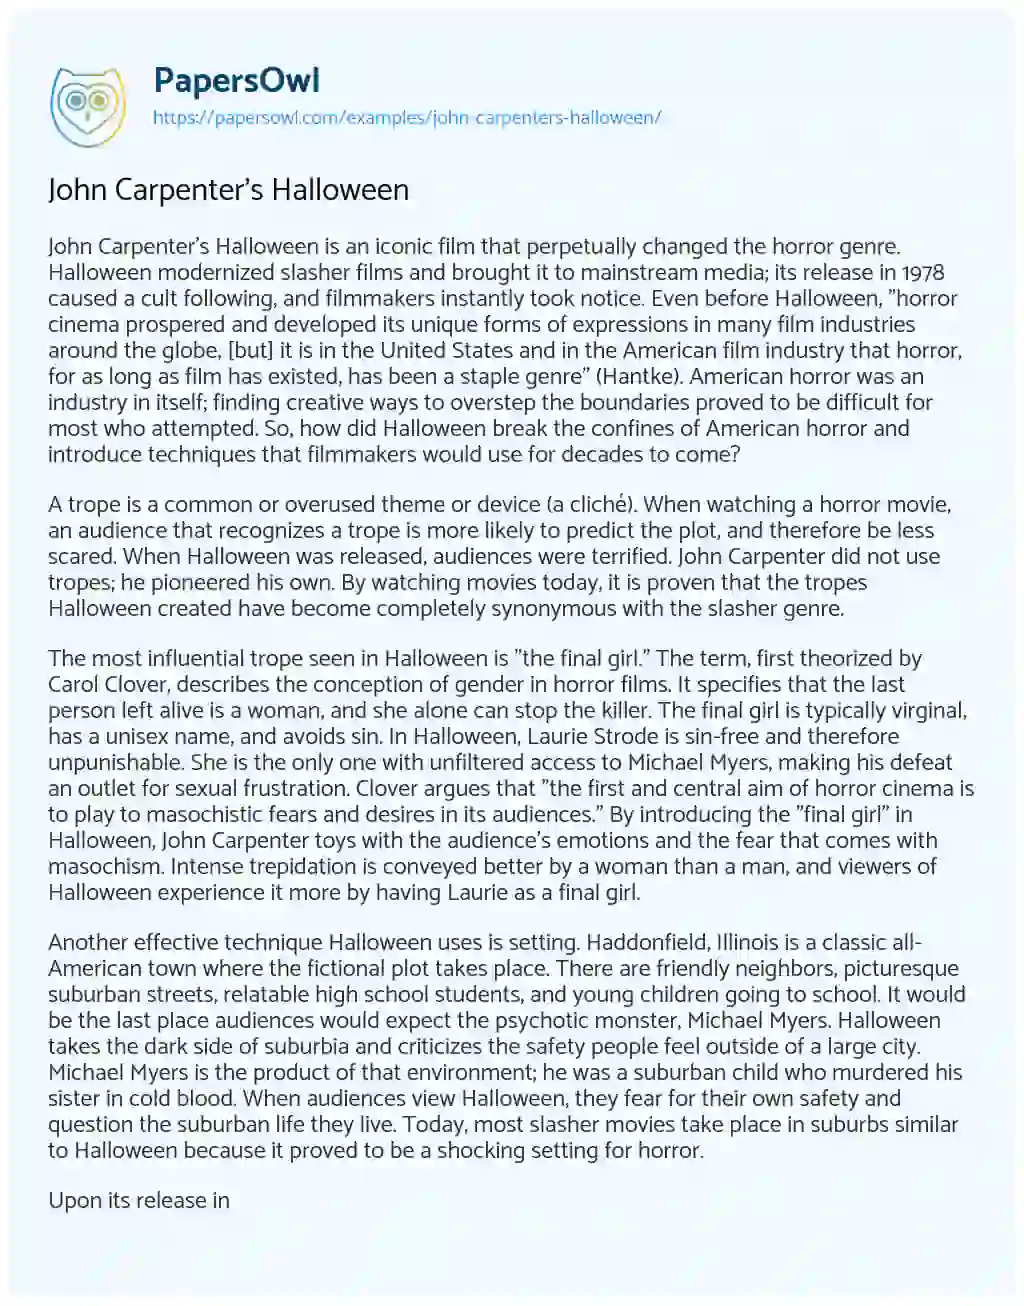 Essay on John Carpenter’s Halloween